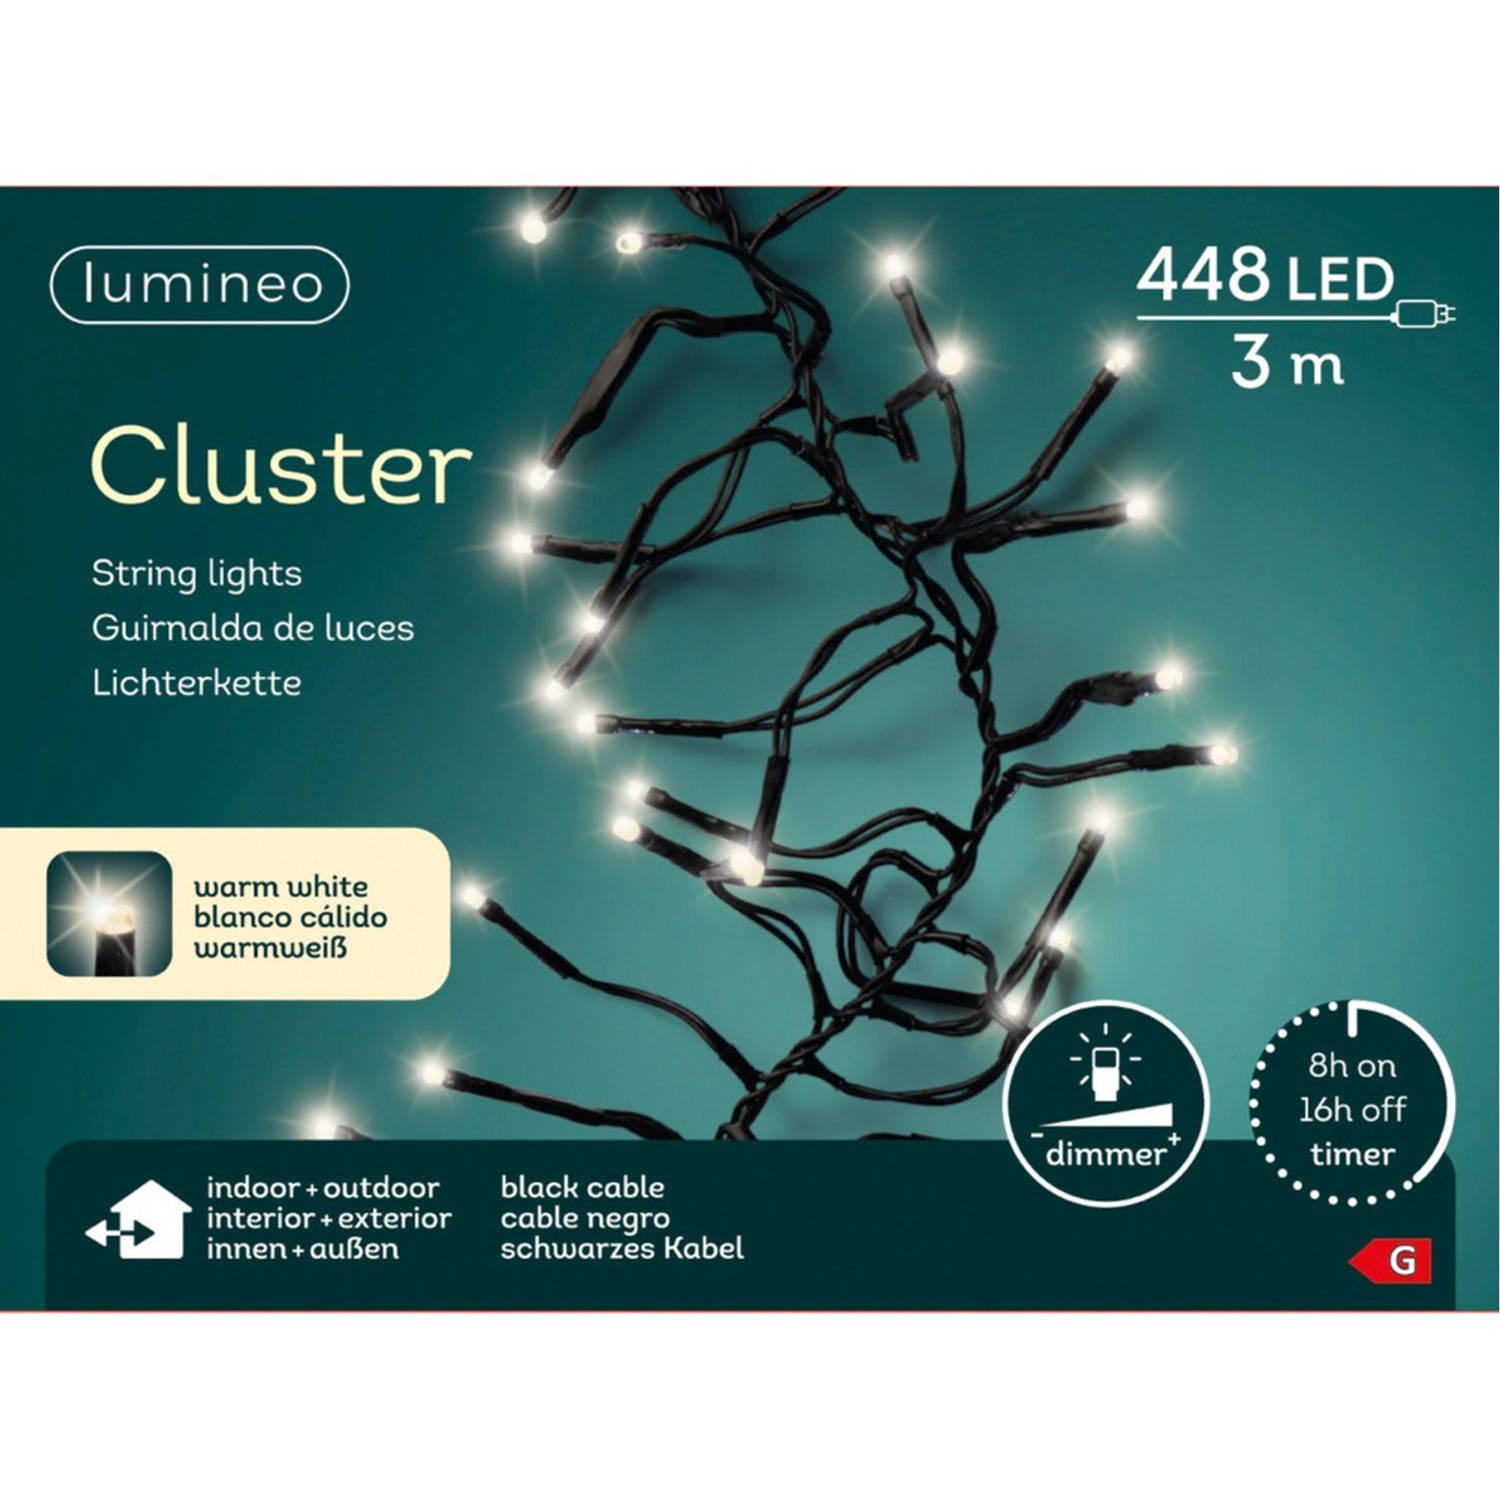 Cluster kerstverlichting (448 LED's)